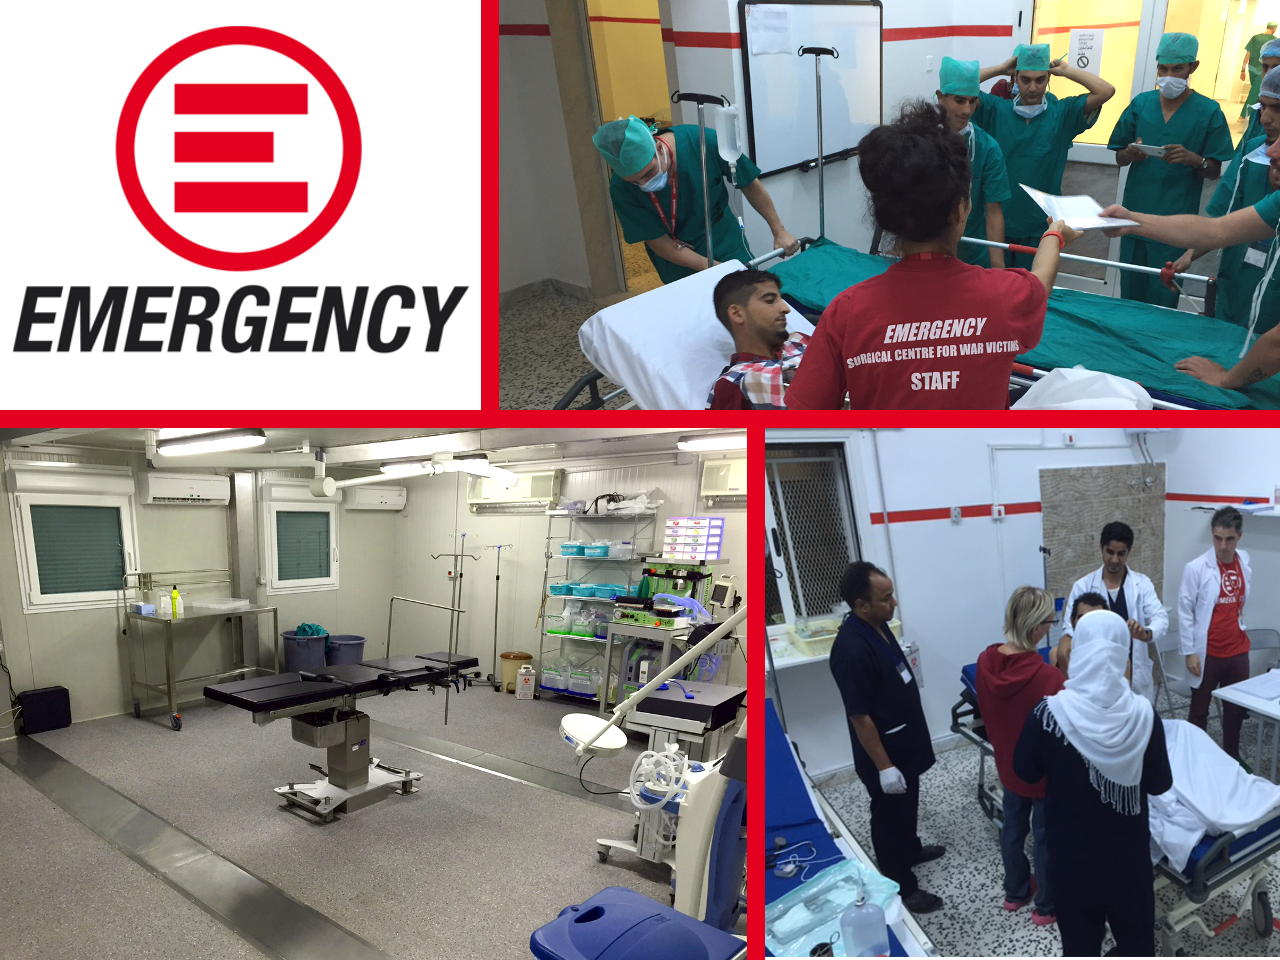 Emergency: aperto nuovo ospedale di chirurgia di guerra in Libia, a Gernada